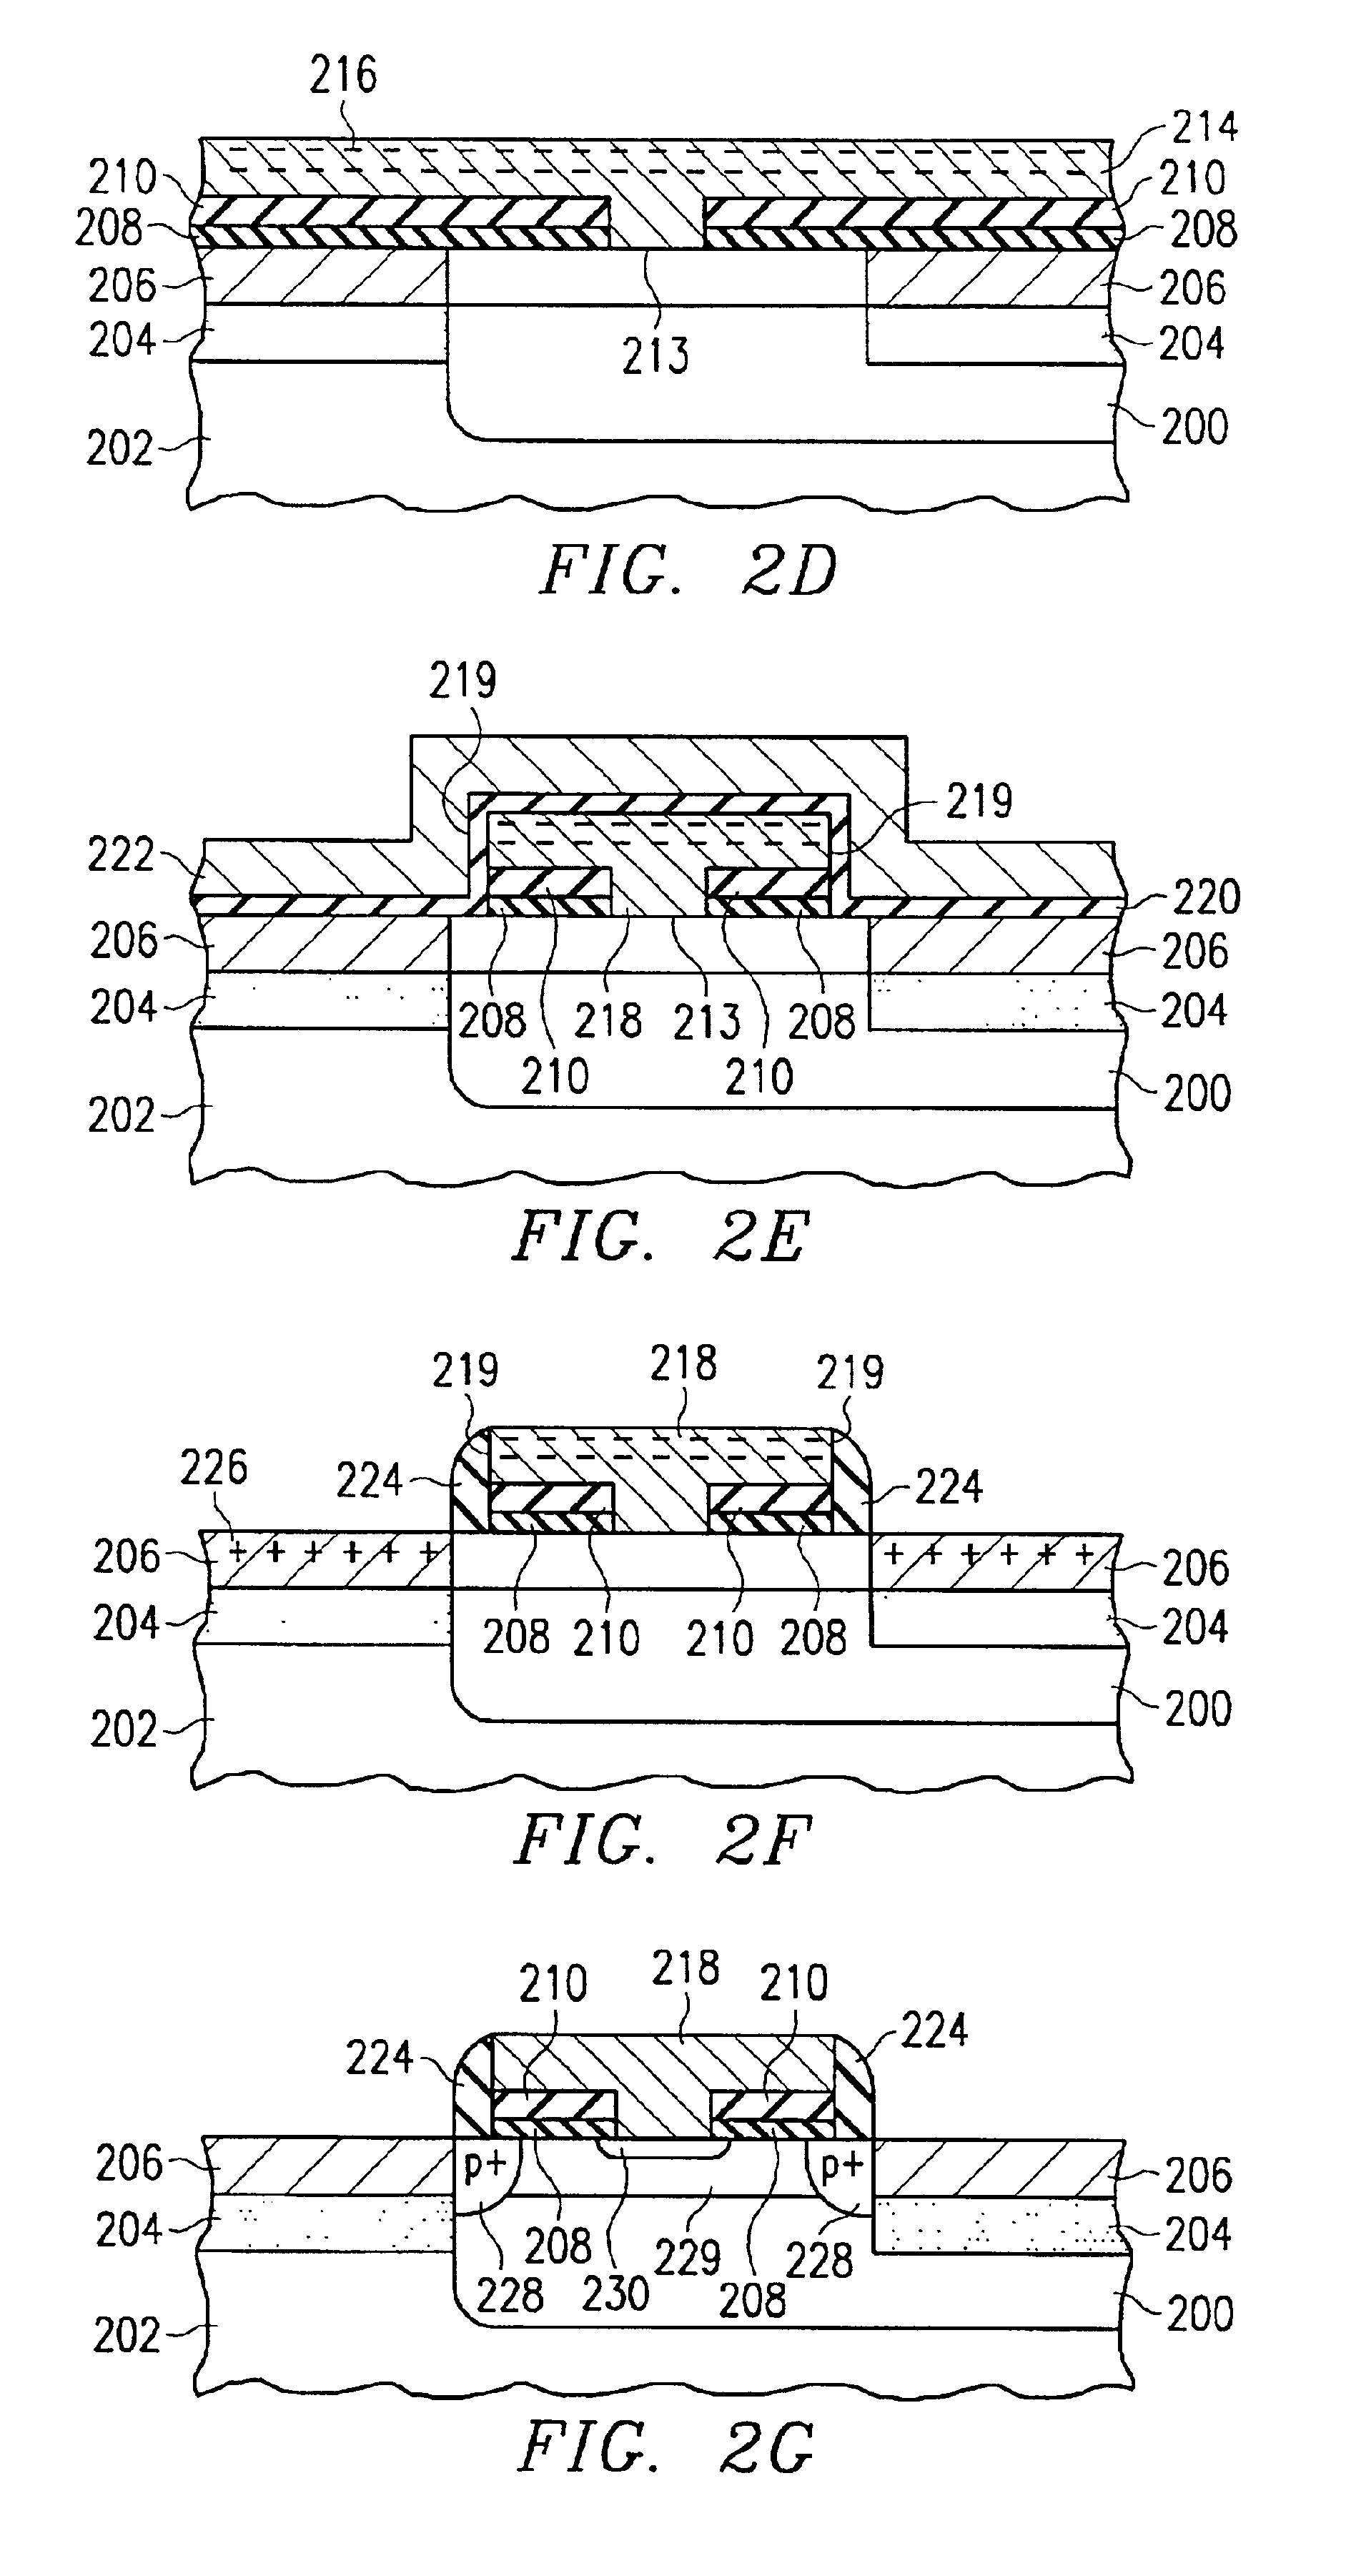 Method for manufacturing a bipolar junction transistor